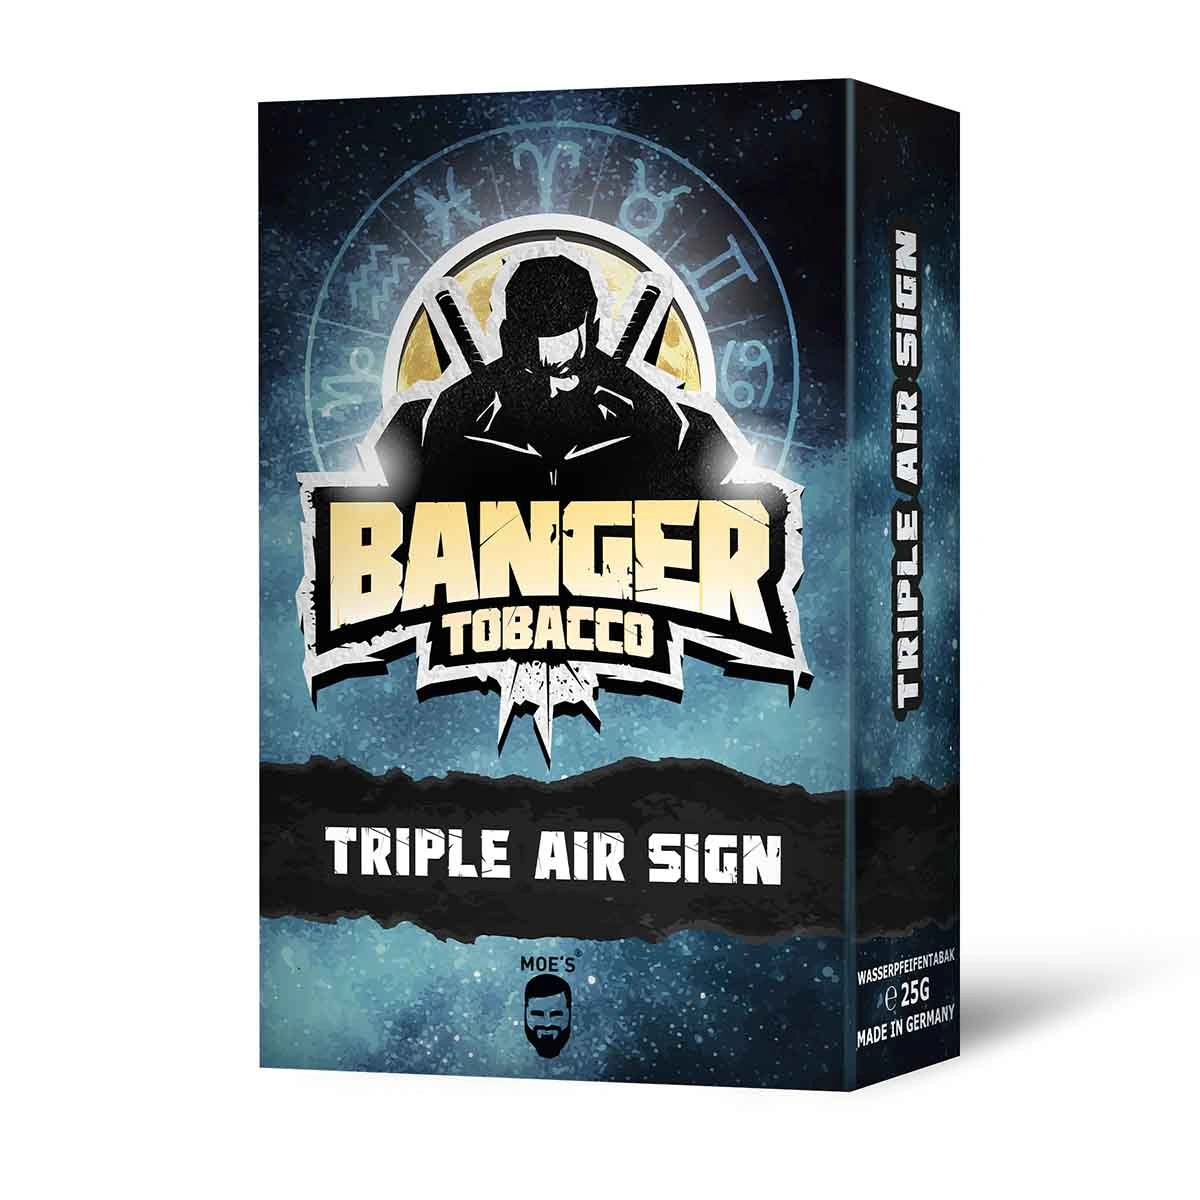 Triple Air Sign 25g | Banger